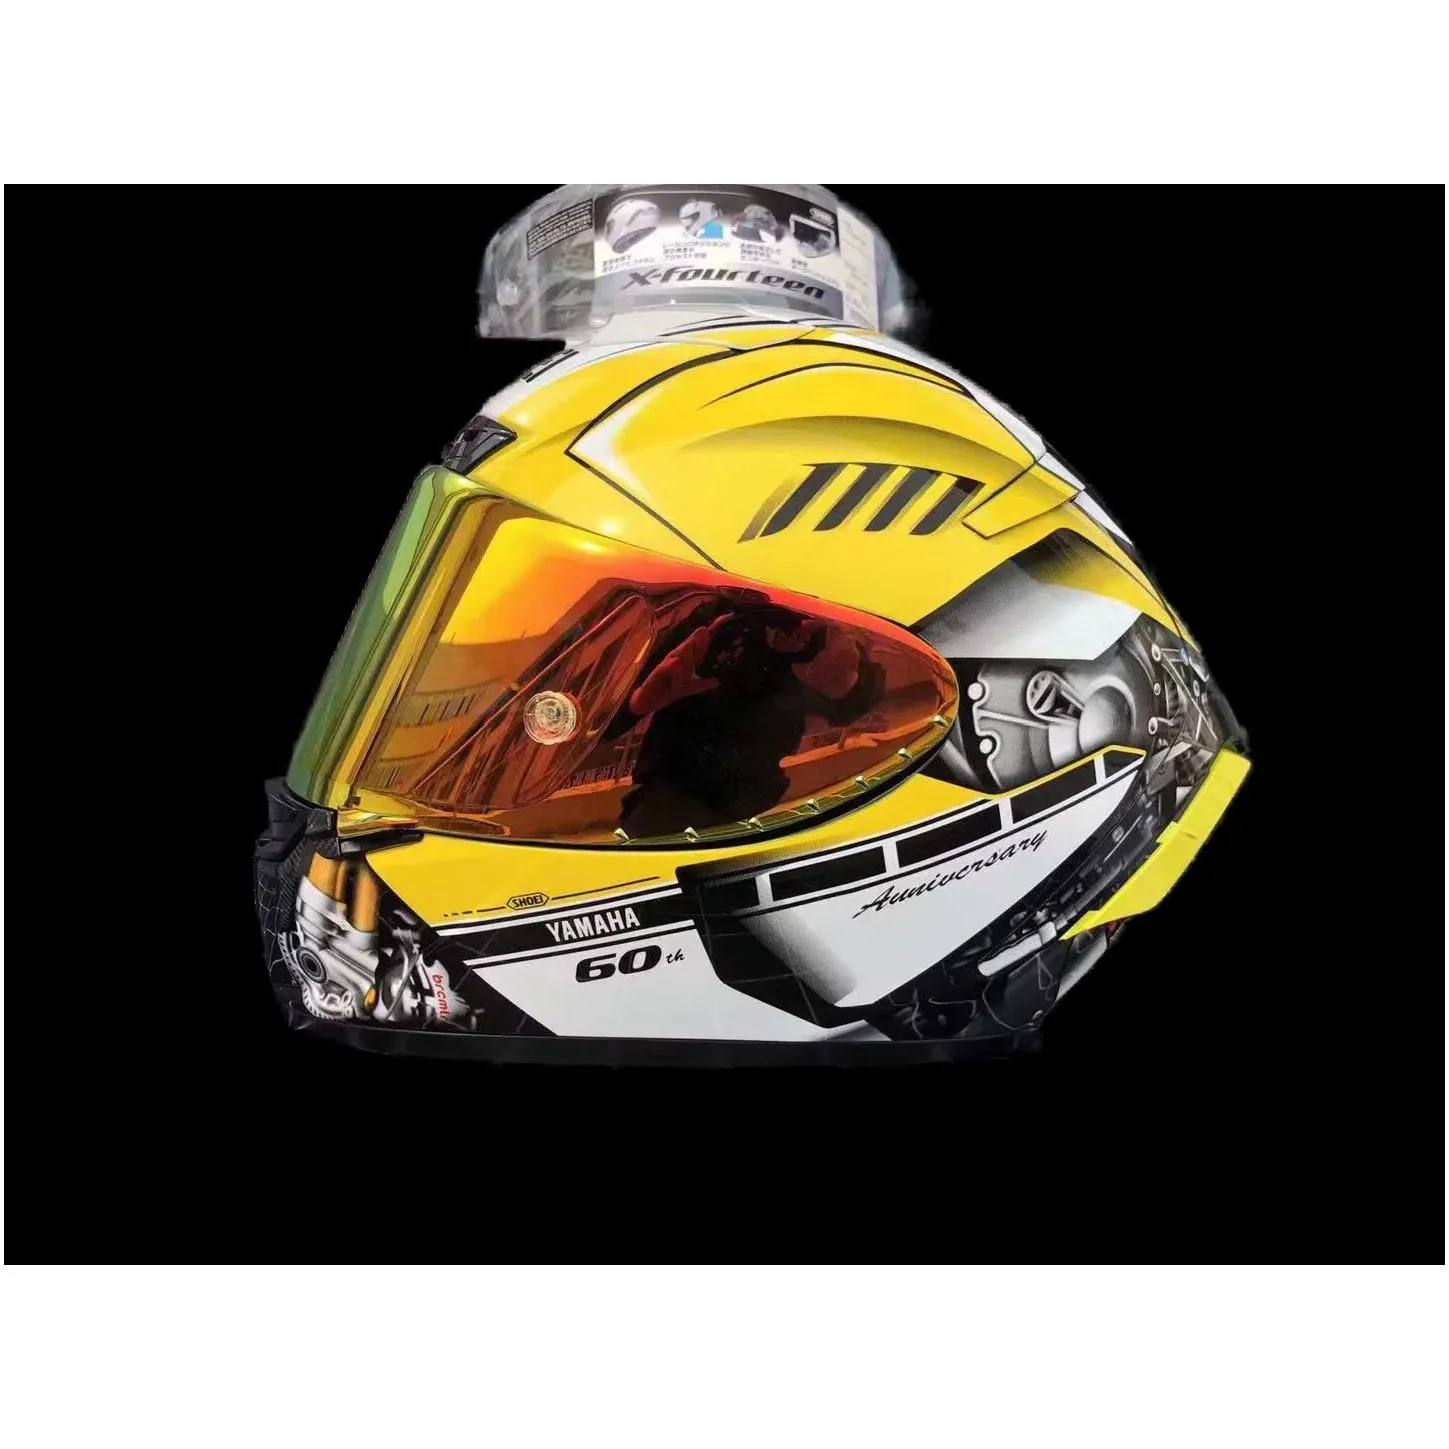 Full Face shoei X14 yaha rjm 60 Motorcycle Helmet antifog visor Man Riding Car motocross racing motorbike helmetNOTORIGINALhel9708833